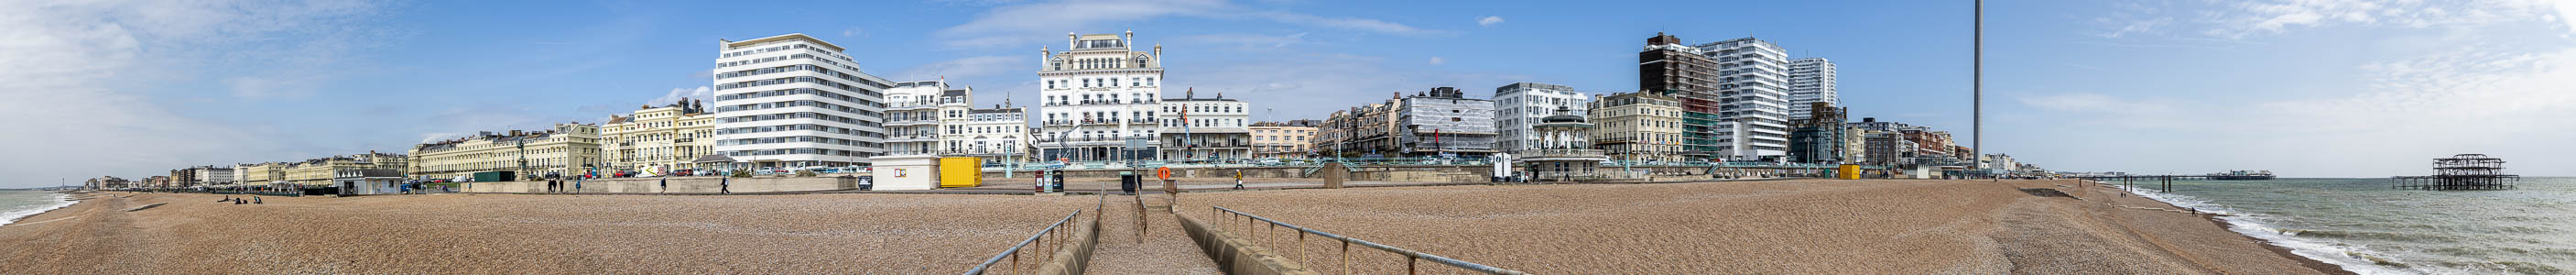 Brighton Beach, King's Road, Ärmelkanal (English Channel), Brighton Pier, West Pier